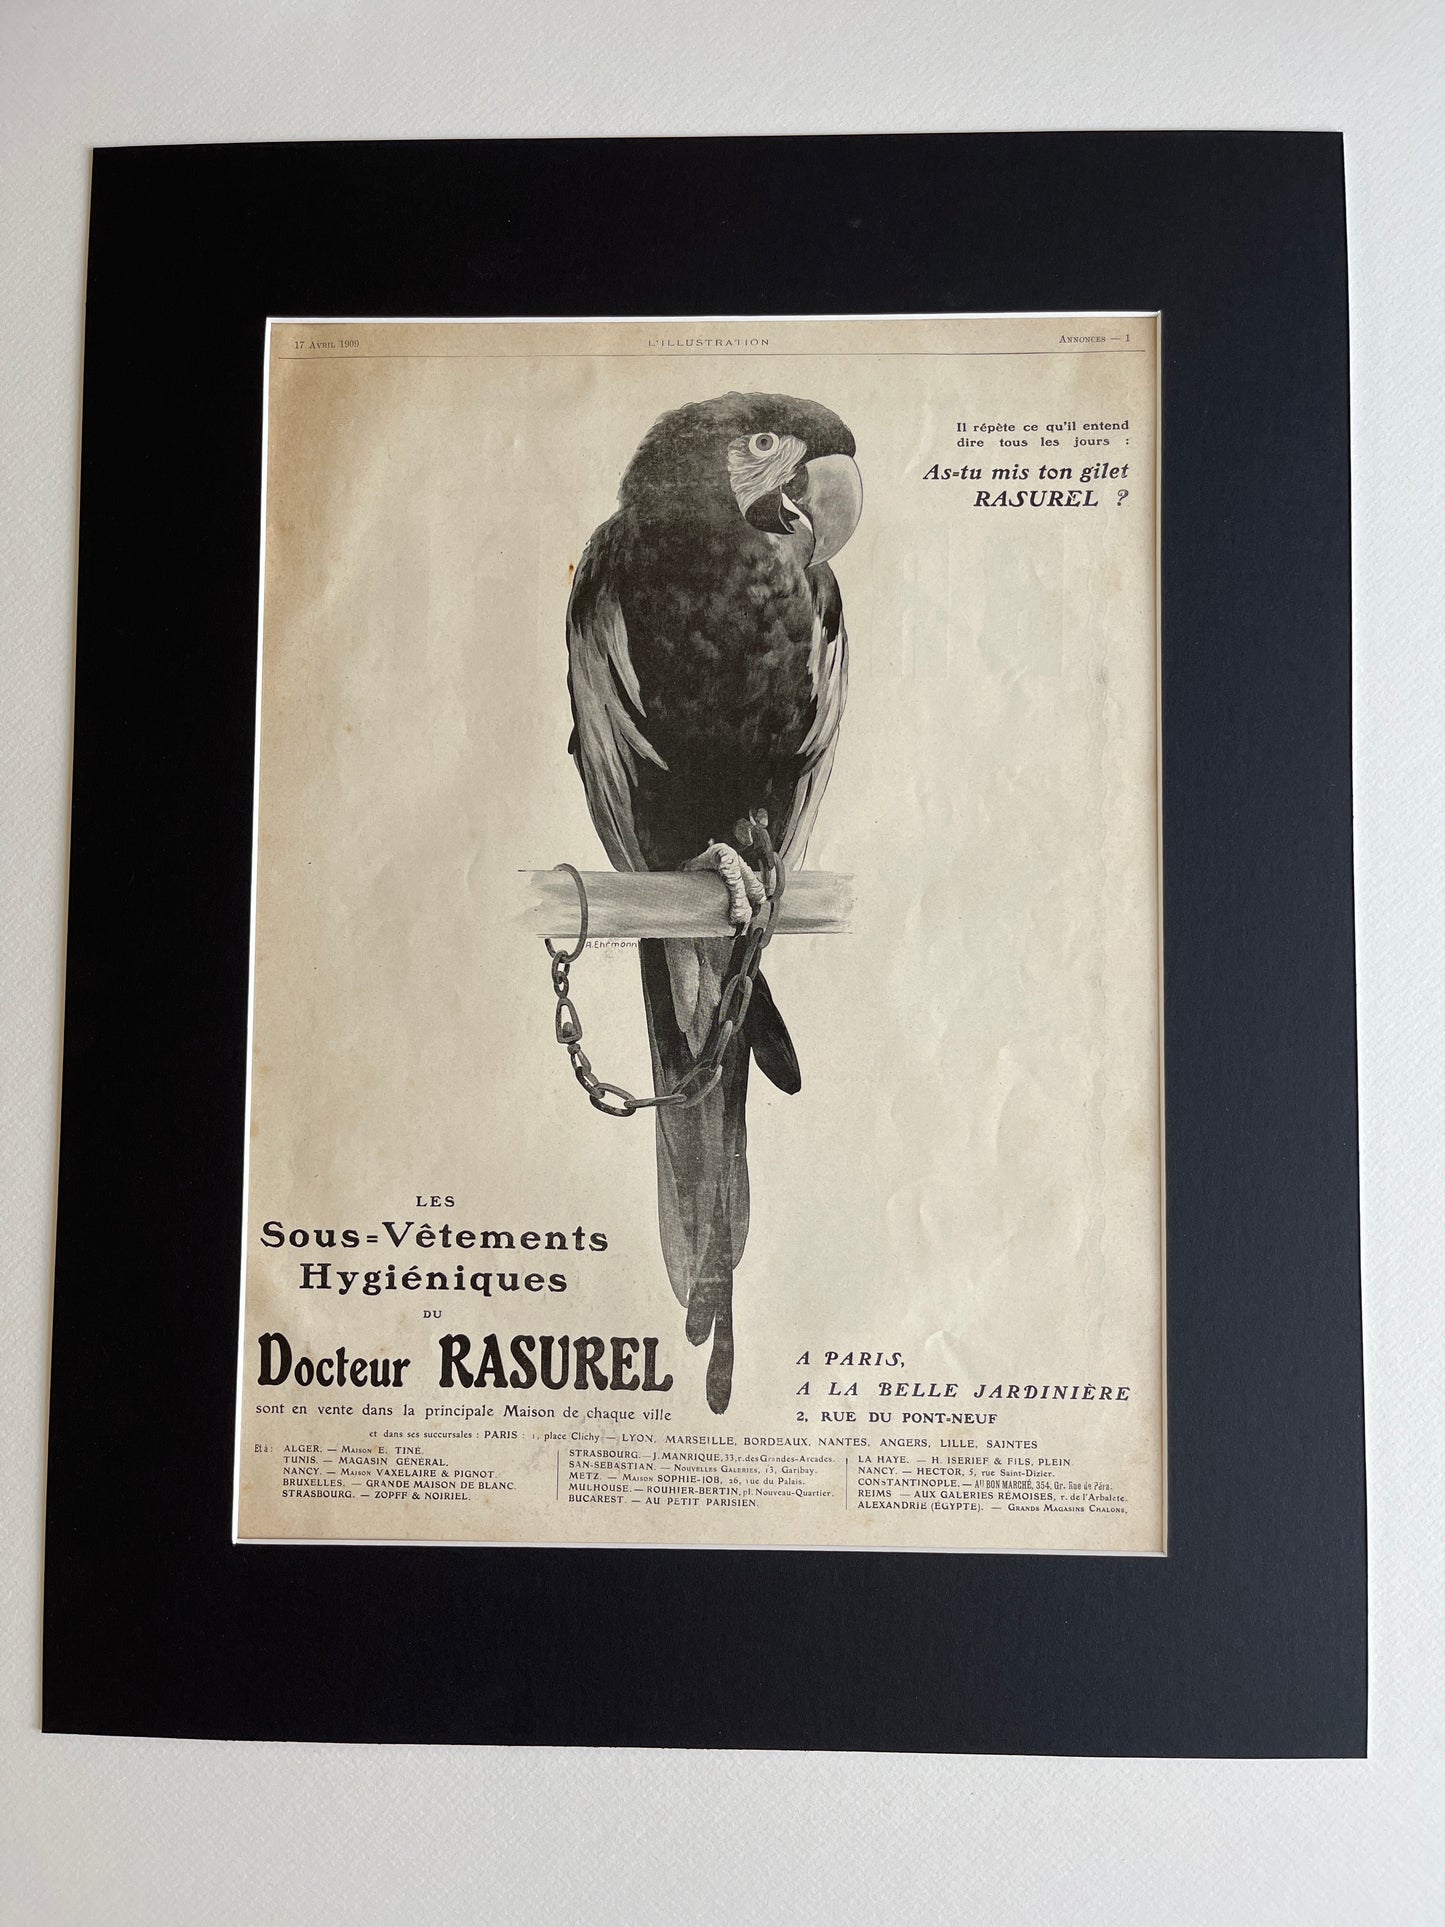 Franse reclame: Docteur Rasurel en Brasier (L’illustration uit 1909)